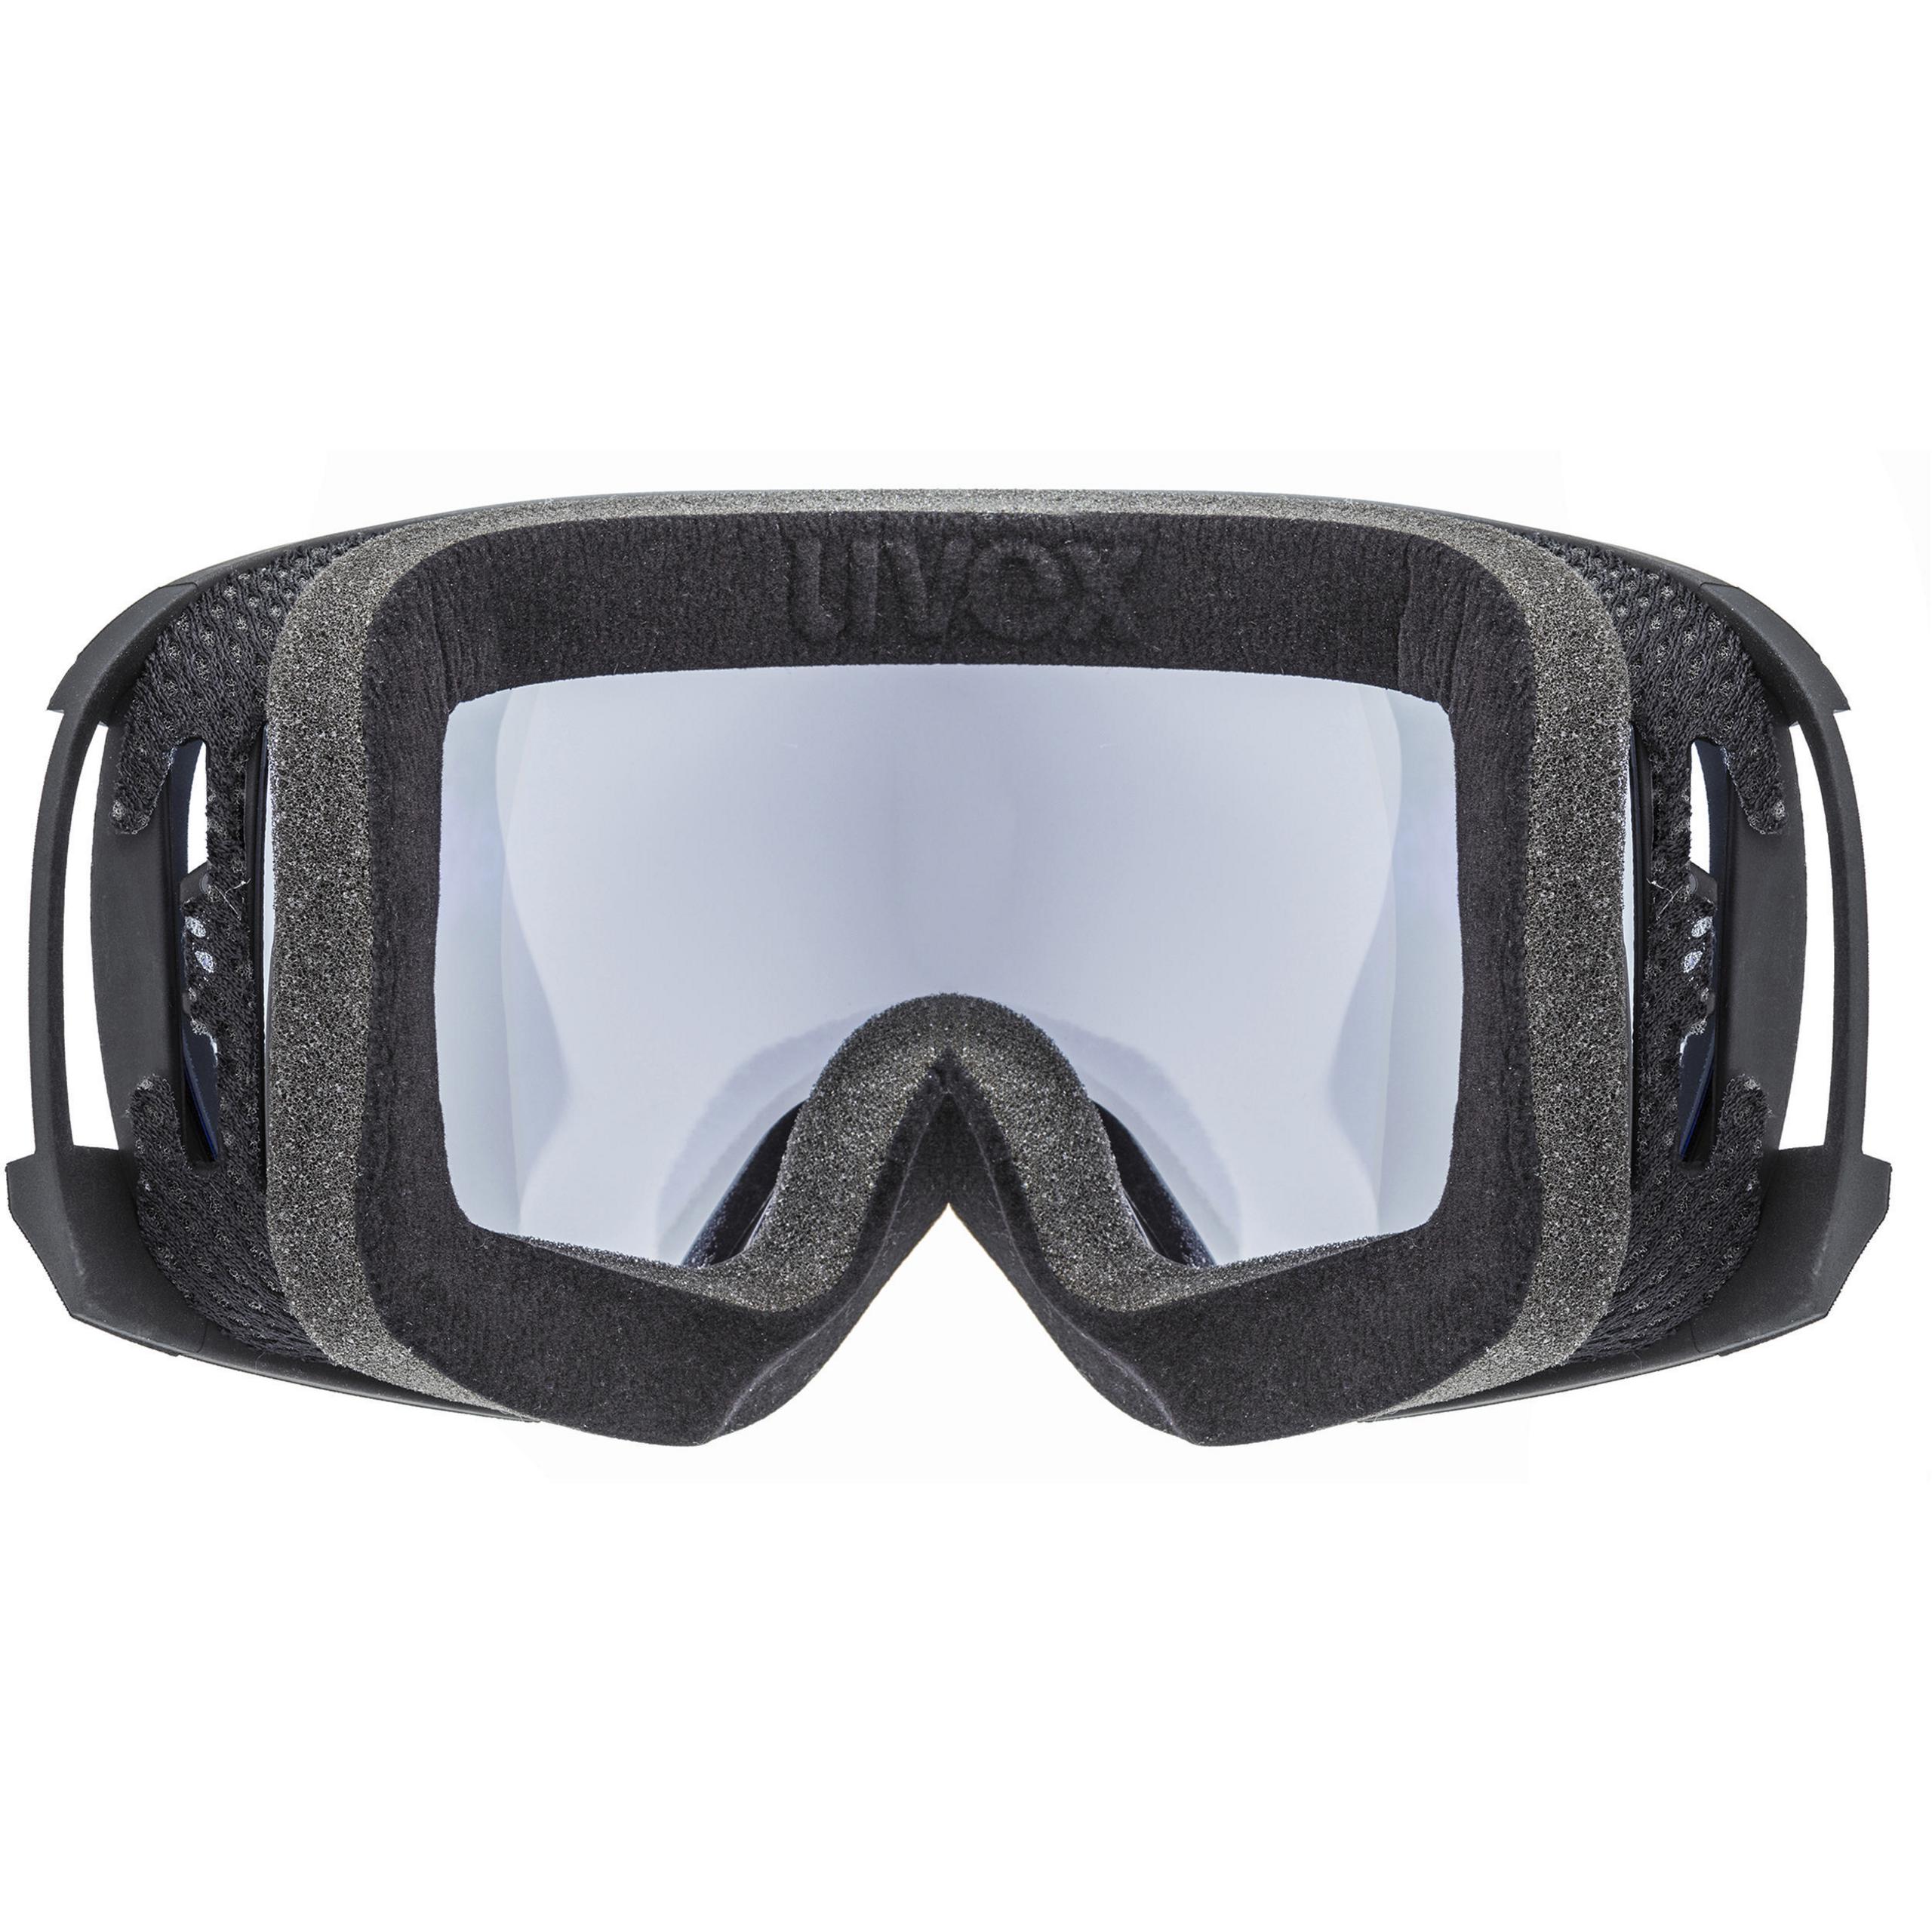 UVEX Contest FM ski unisex snowboardbrille nieve Ski gafas s55013311 